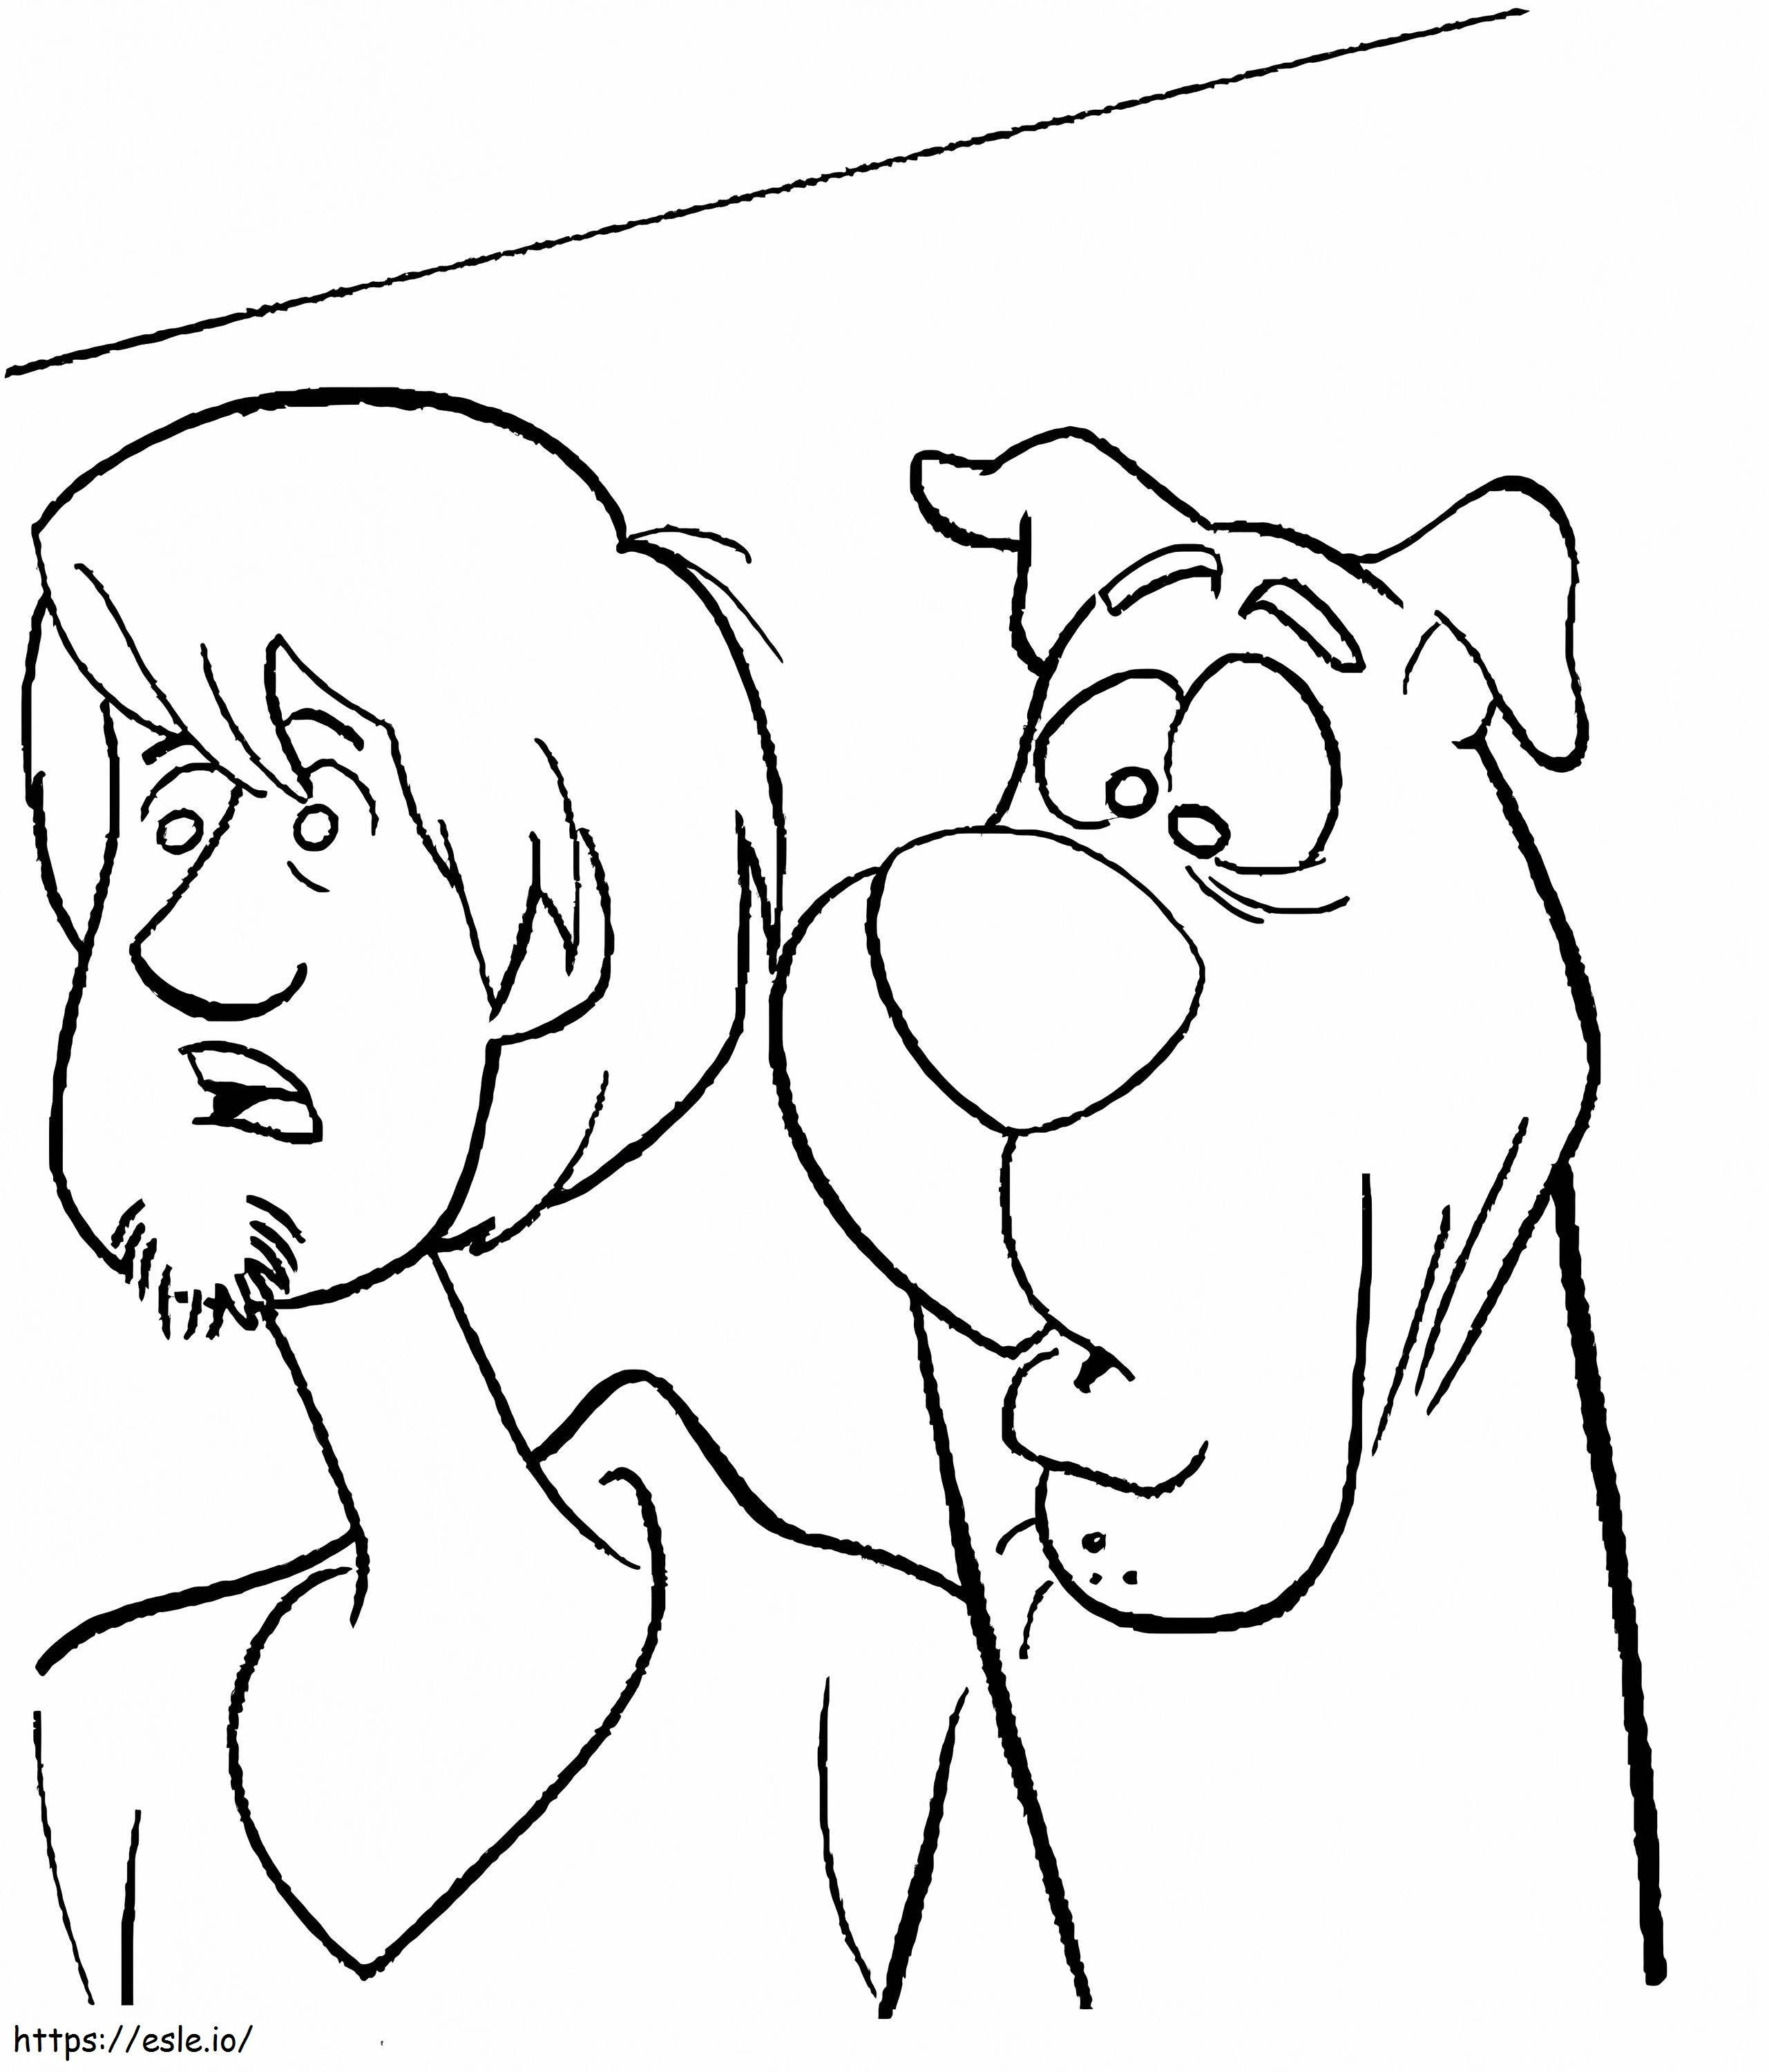 Pelzig und Scooby Doo lustig ausmalbilder